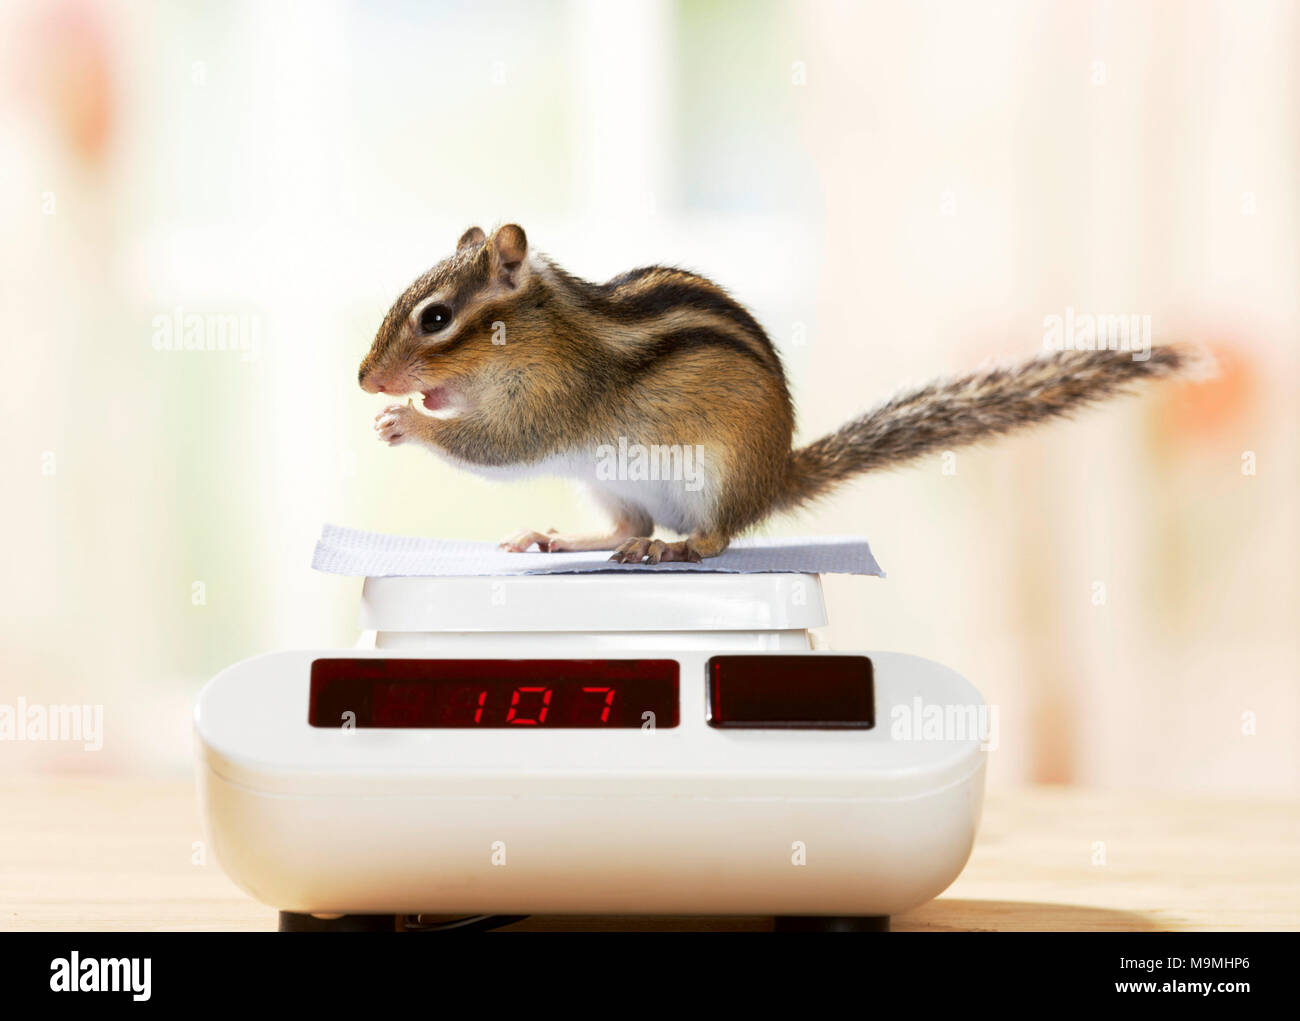 Siberian Chipmunk (Tamias sibiricus) on kitchen scales. Germany Stock Photo